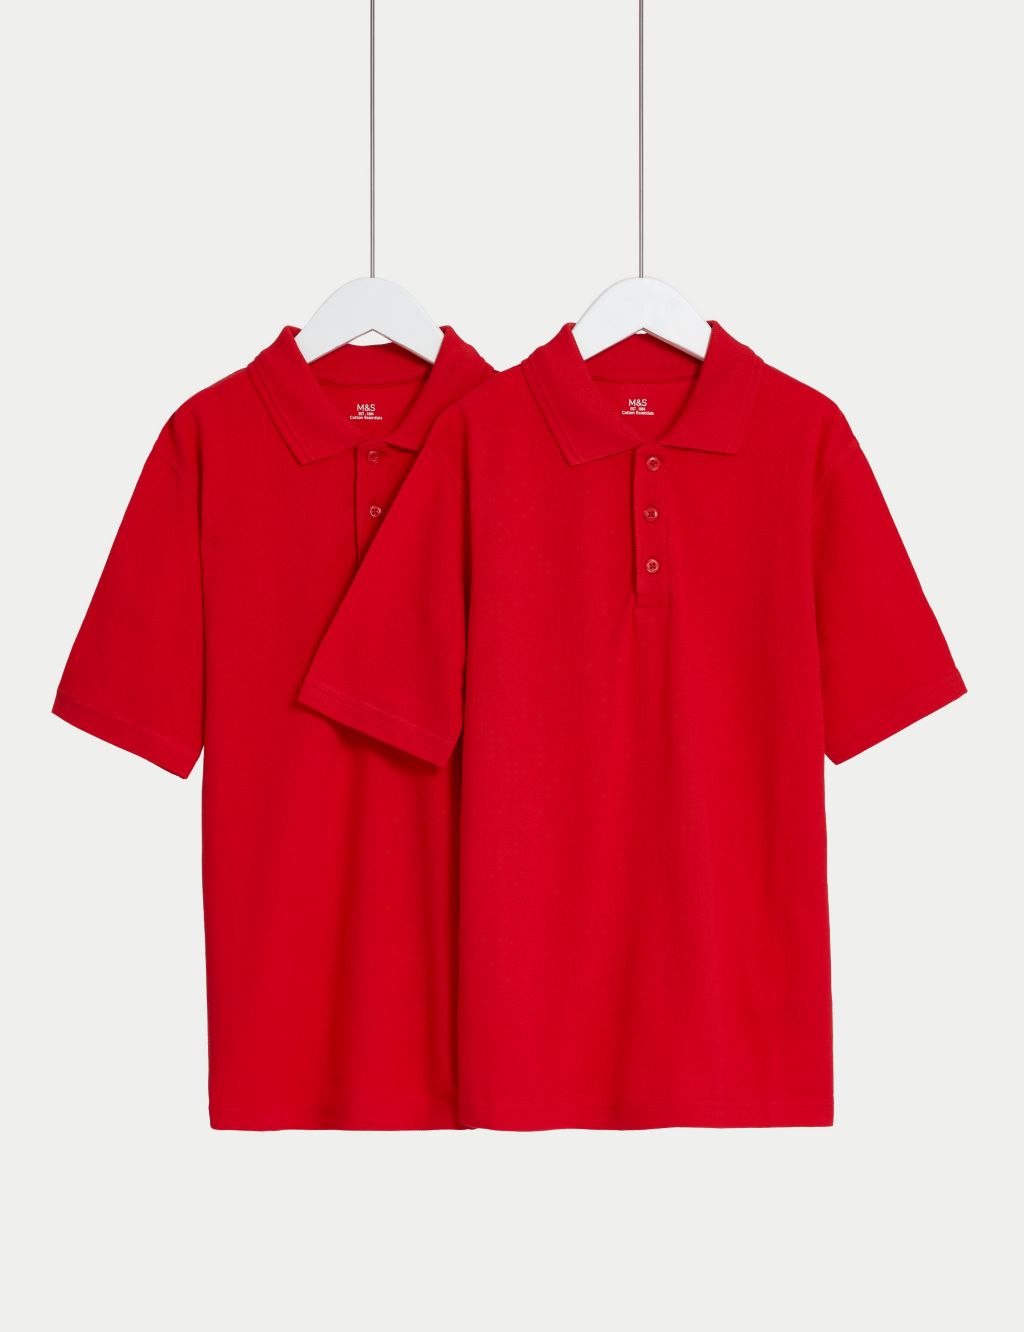 2pk Unisex Pure Cotton School Polo Shirts (2-18 Yrs)